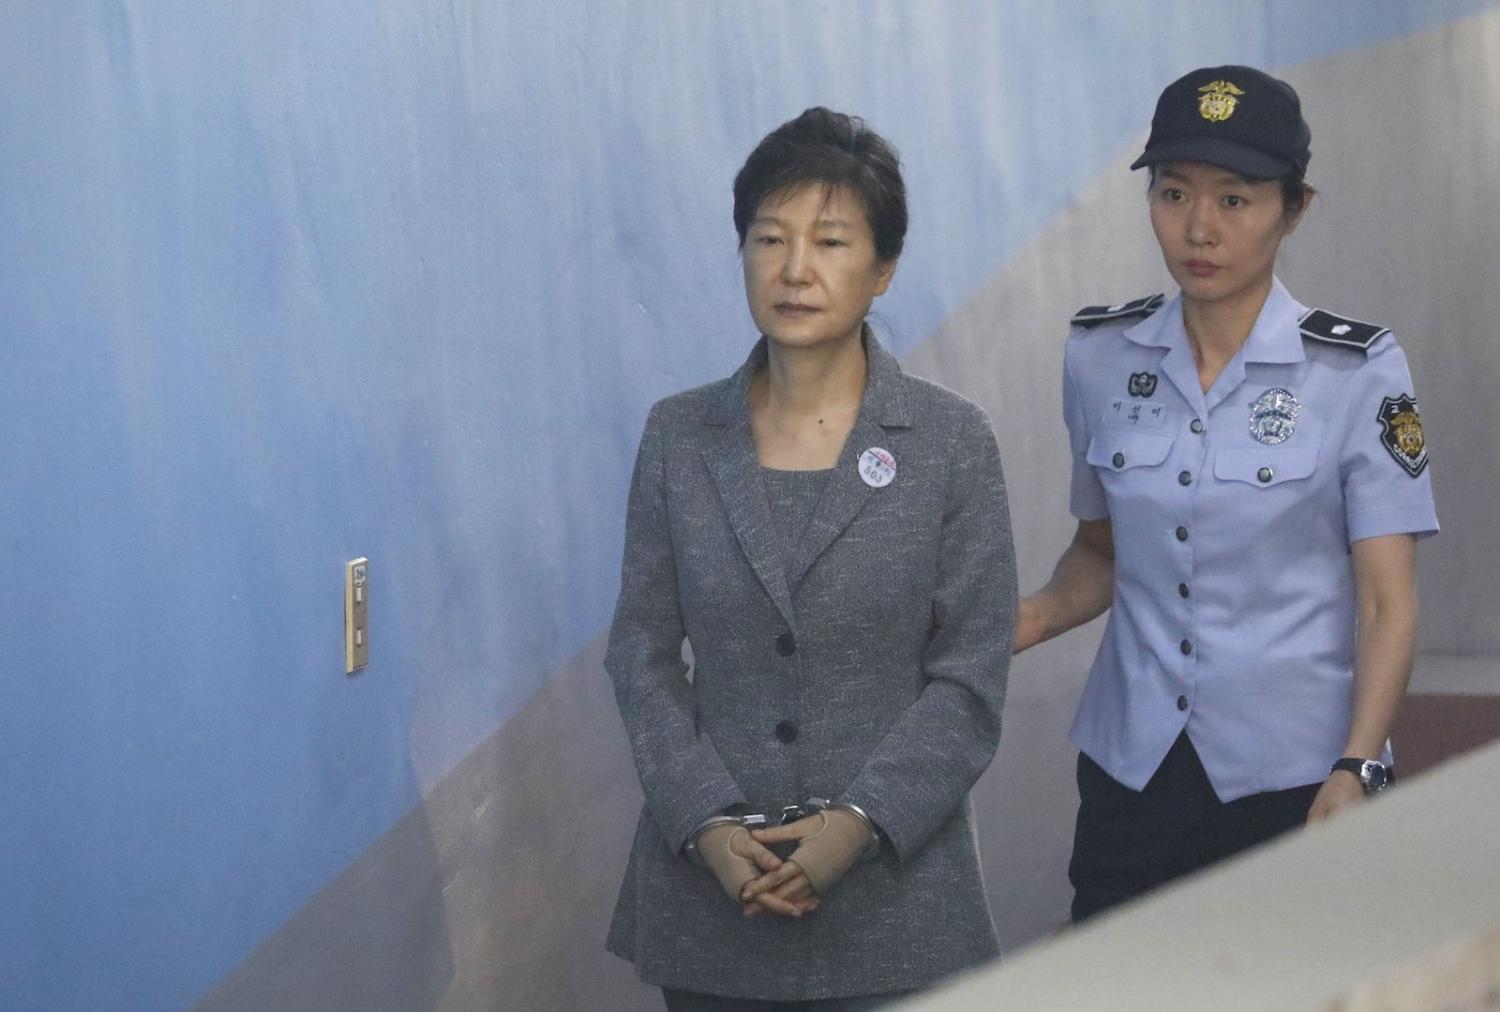 Former South Korean leader Park Geun-hye arrives at court in August 2017 (Photo: Kim Hong-ji via Getty) 